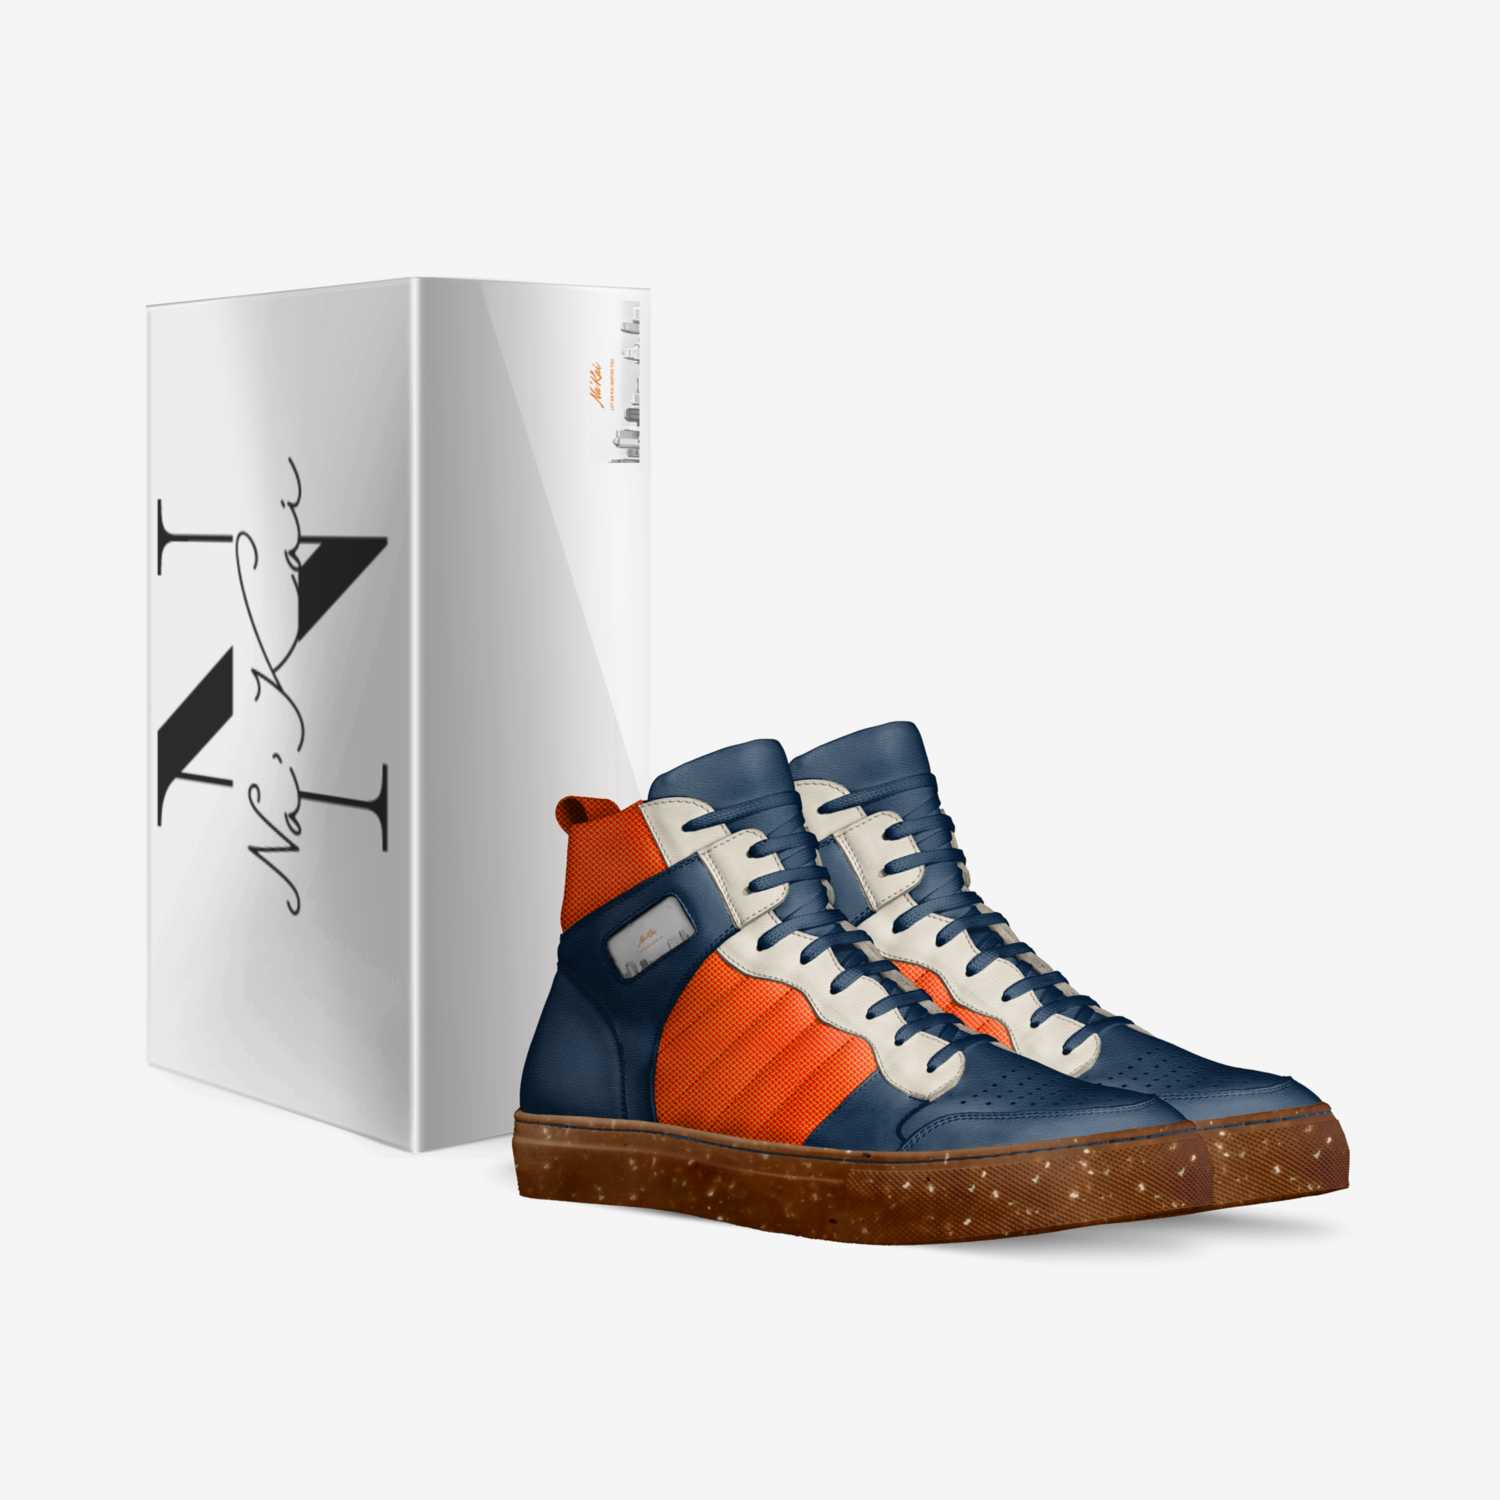 Na'Kai custom made in Italy shoes by Lakeesha Rice | Box view